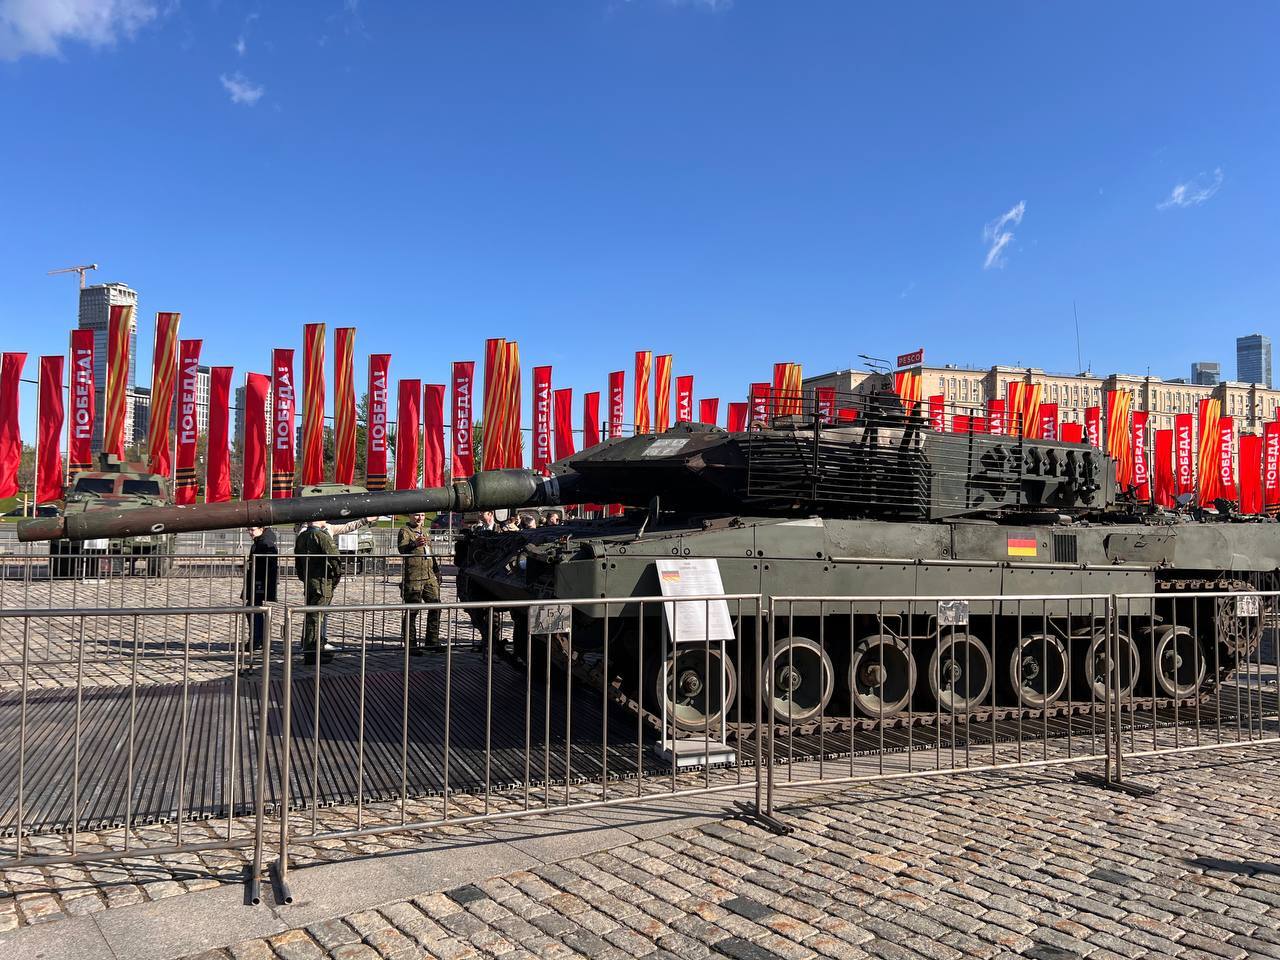 German Leopard tanks in Moscow